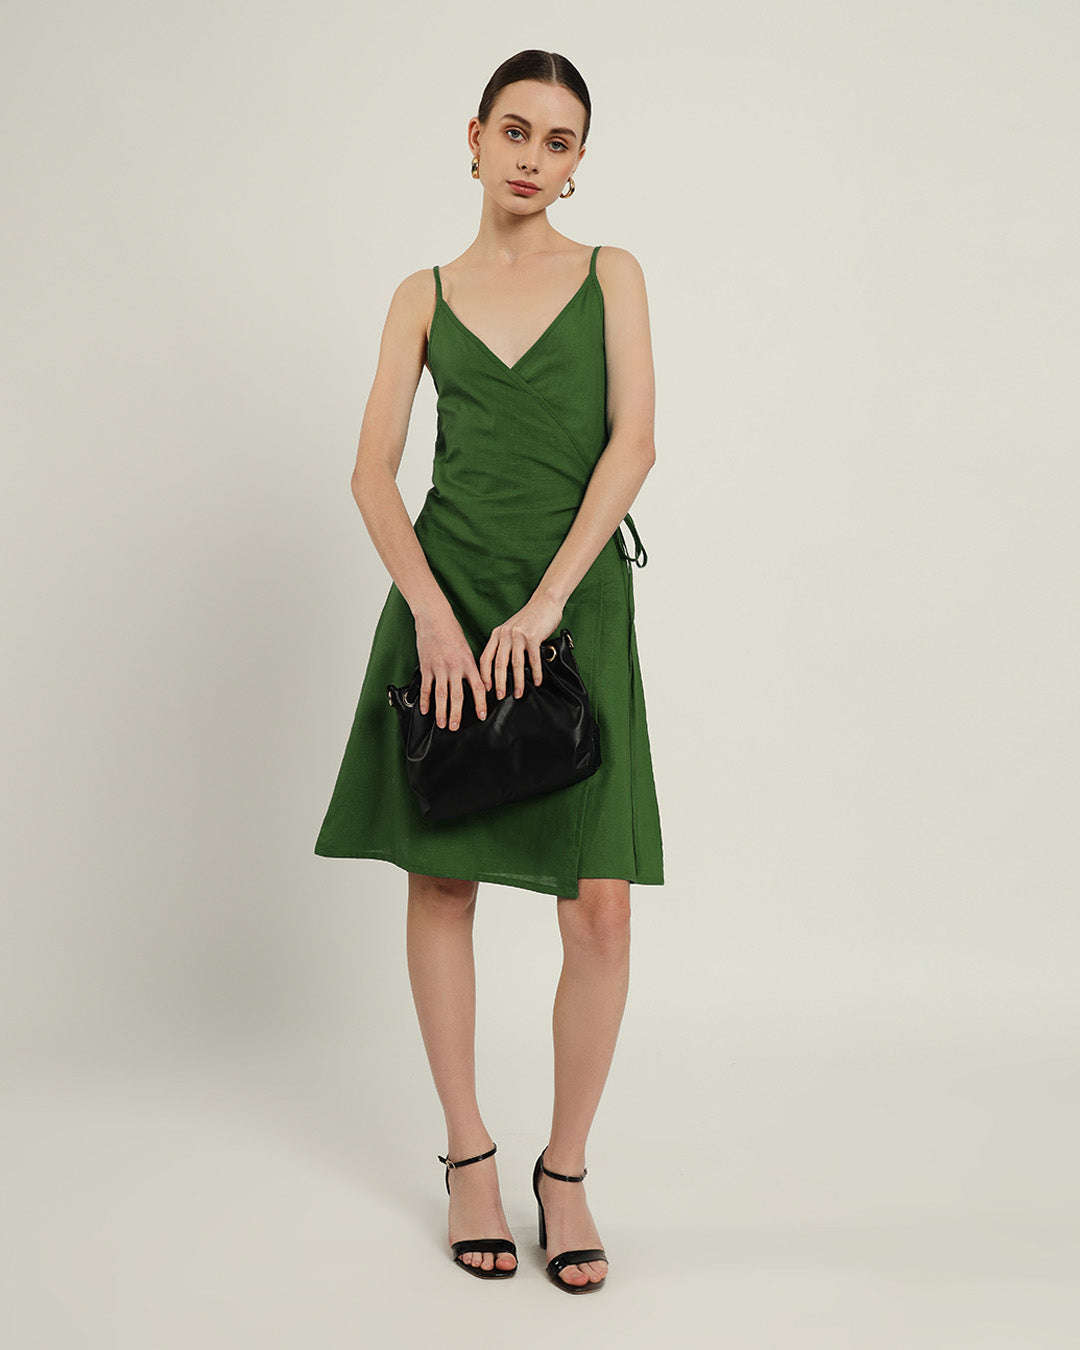 The Chambéry Emerald Cotton Dress